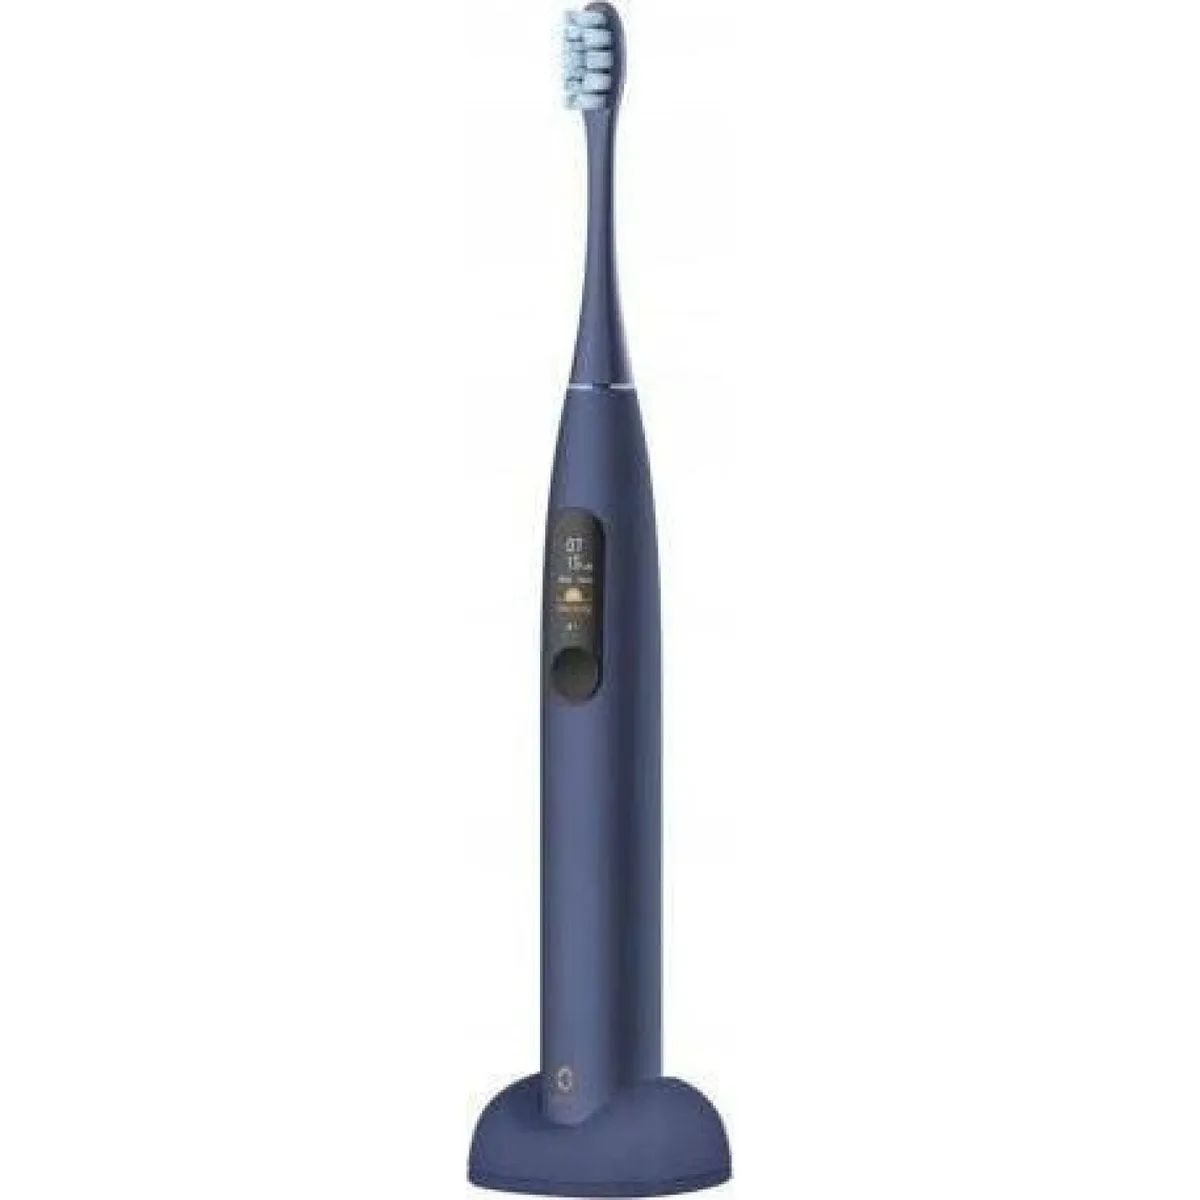 Oclean endurance e5501 black. Зубная щётка Oclean x Pro Aurora Purple. Электрическая зубная щетка Oclean x Pro (фиолетовый). Зубная щетка Oclean электрическая зубная щетка Oclean x Pro синяя. Oclean x Smart Electric Toothbrush.